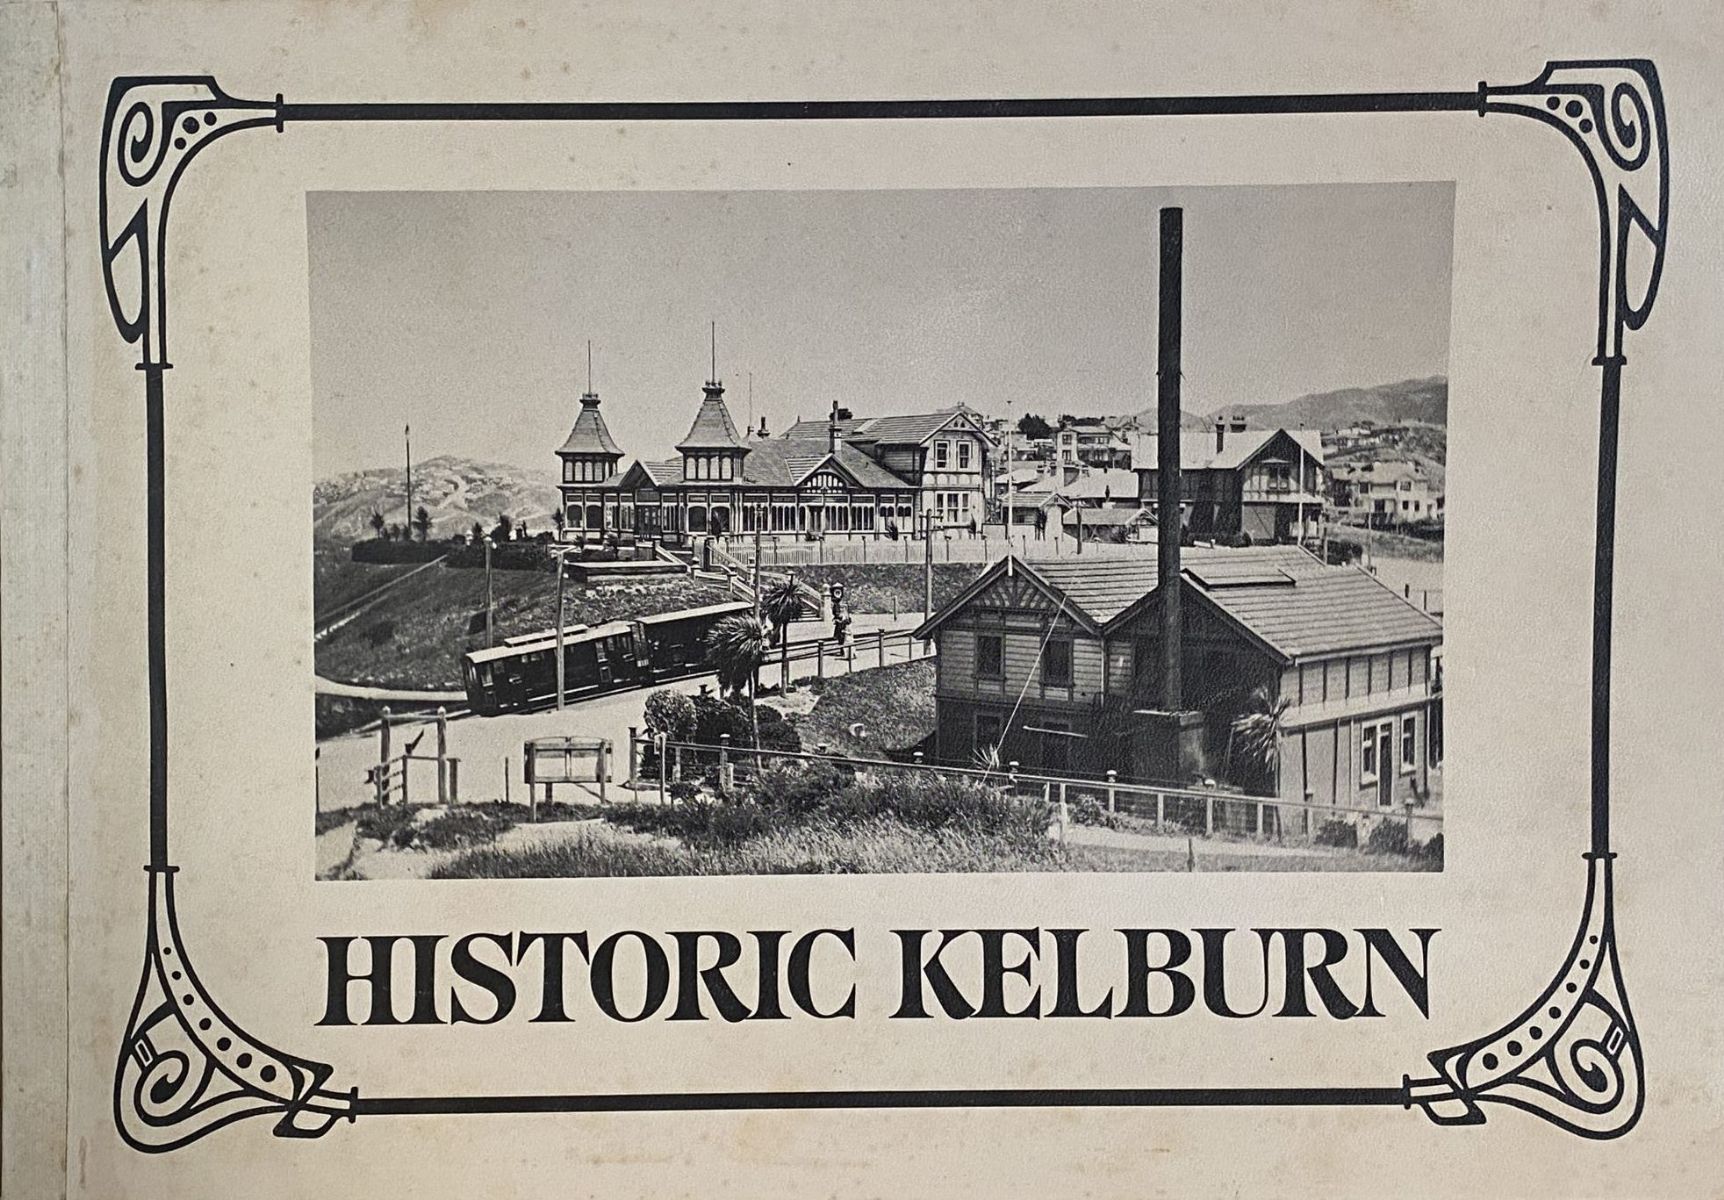 HISTORIC KELBURN